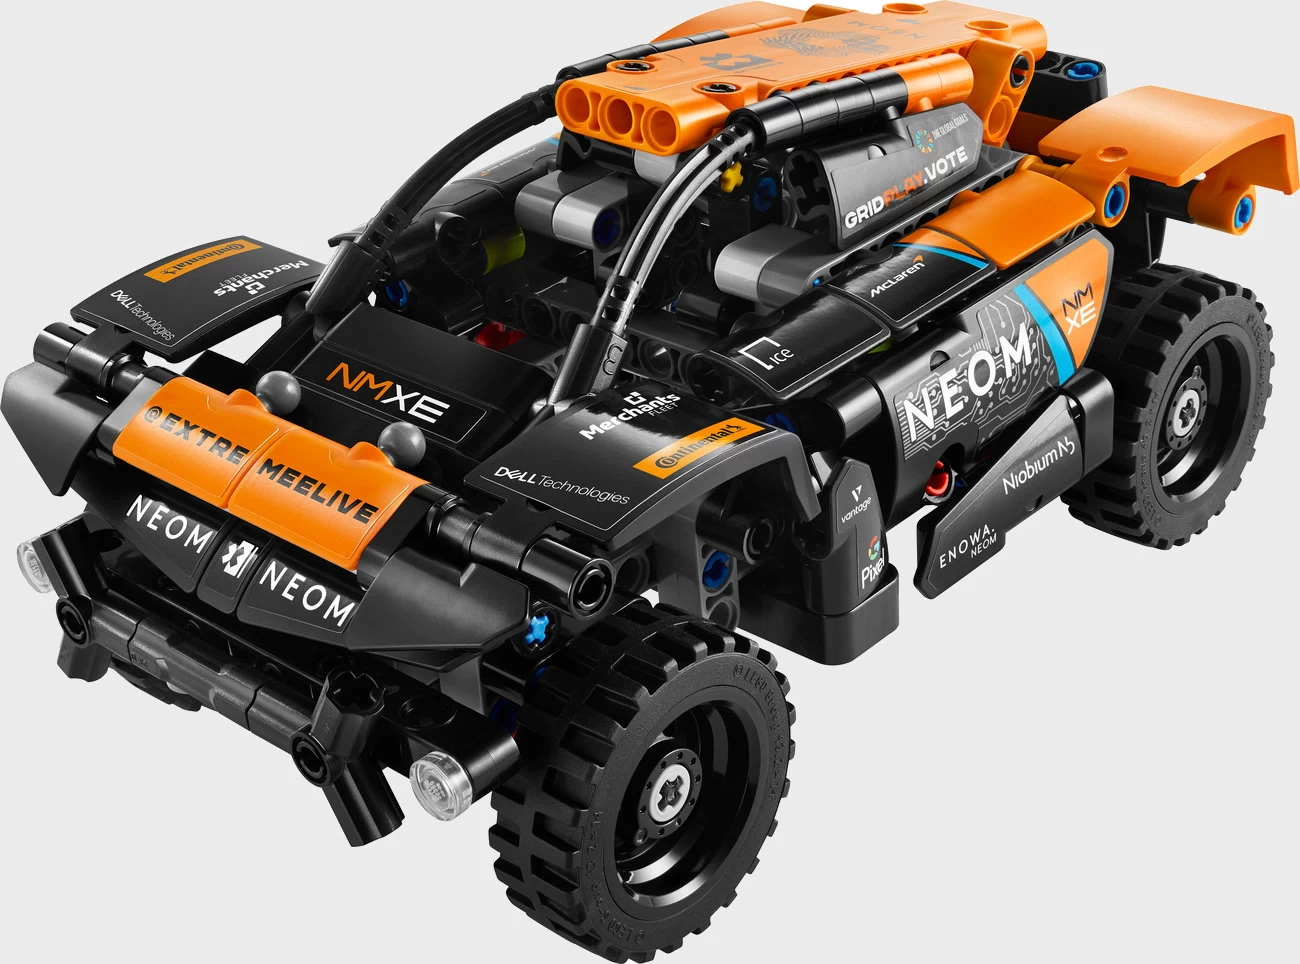 LEGO Technic 42166 - NEOM McLaren Extreme E Race Car